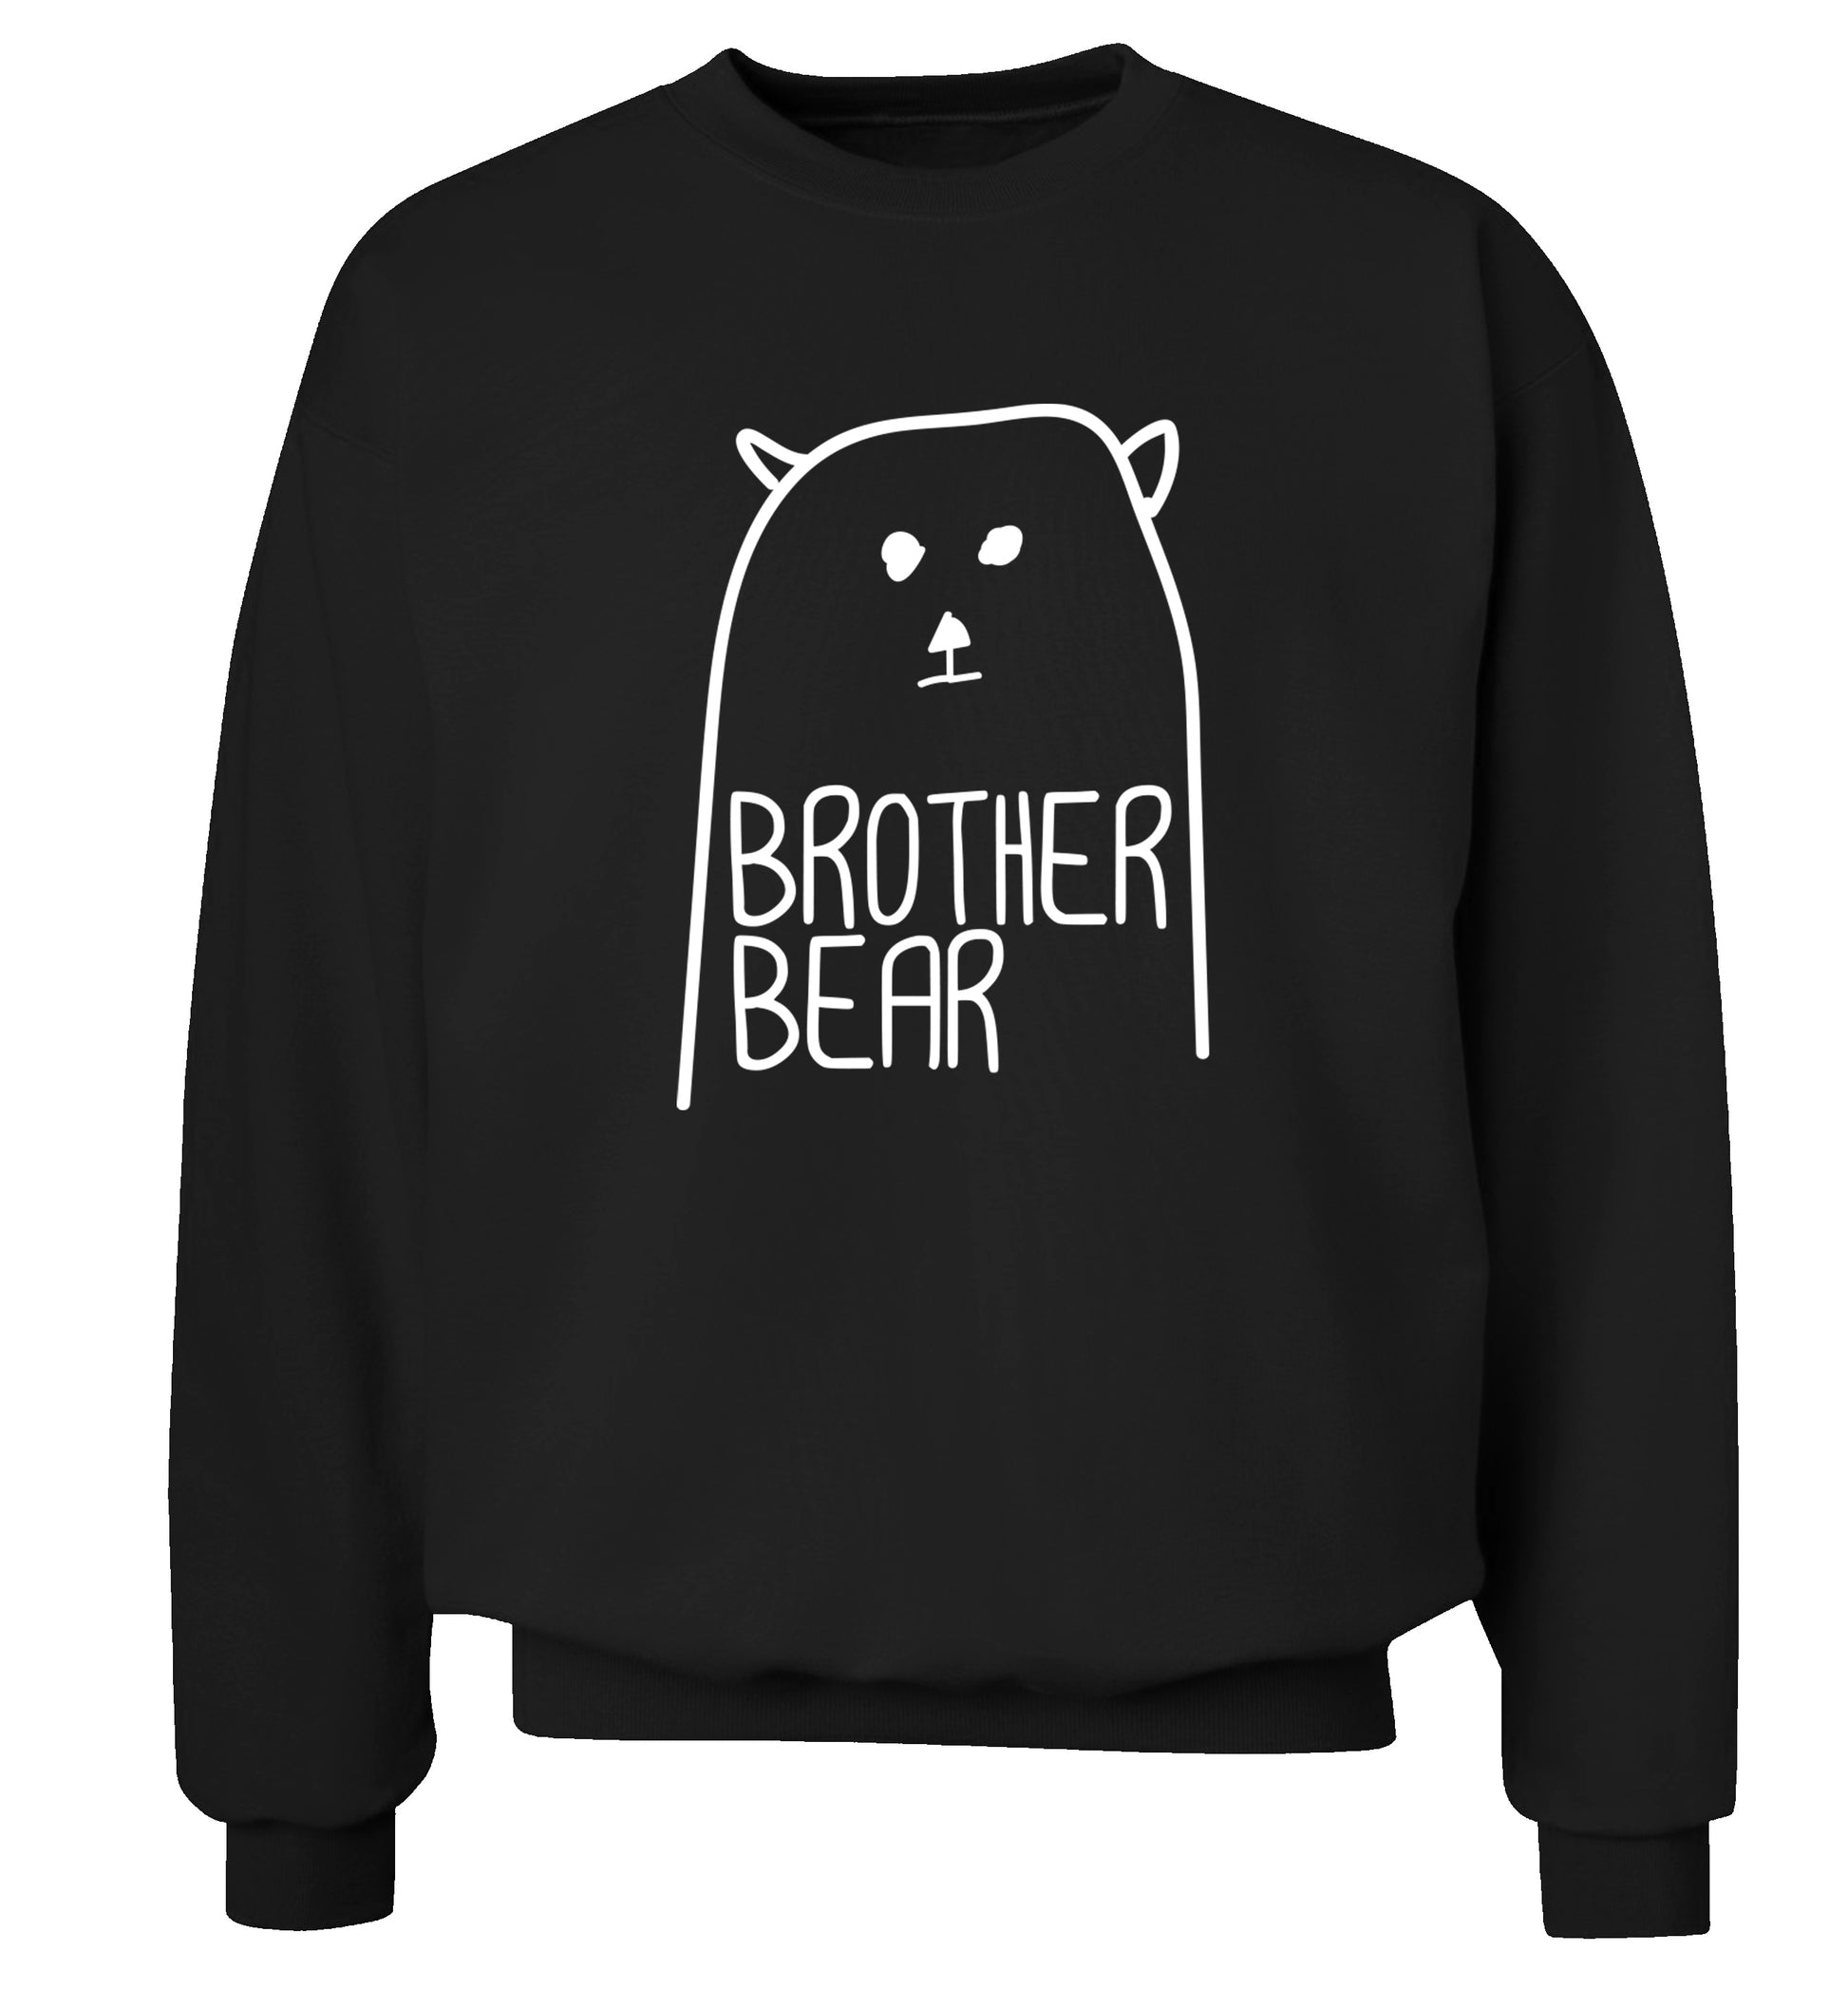 Brother bear Adult's unisex black Sweater 2XL